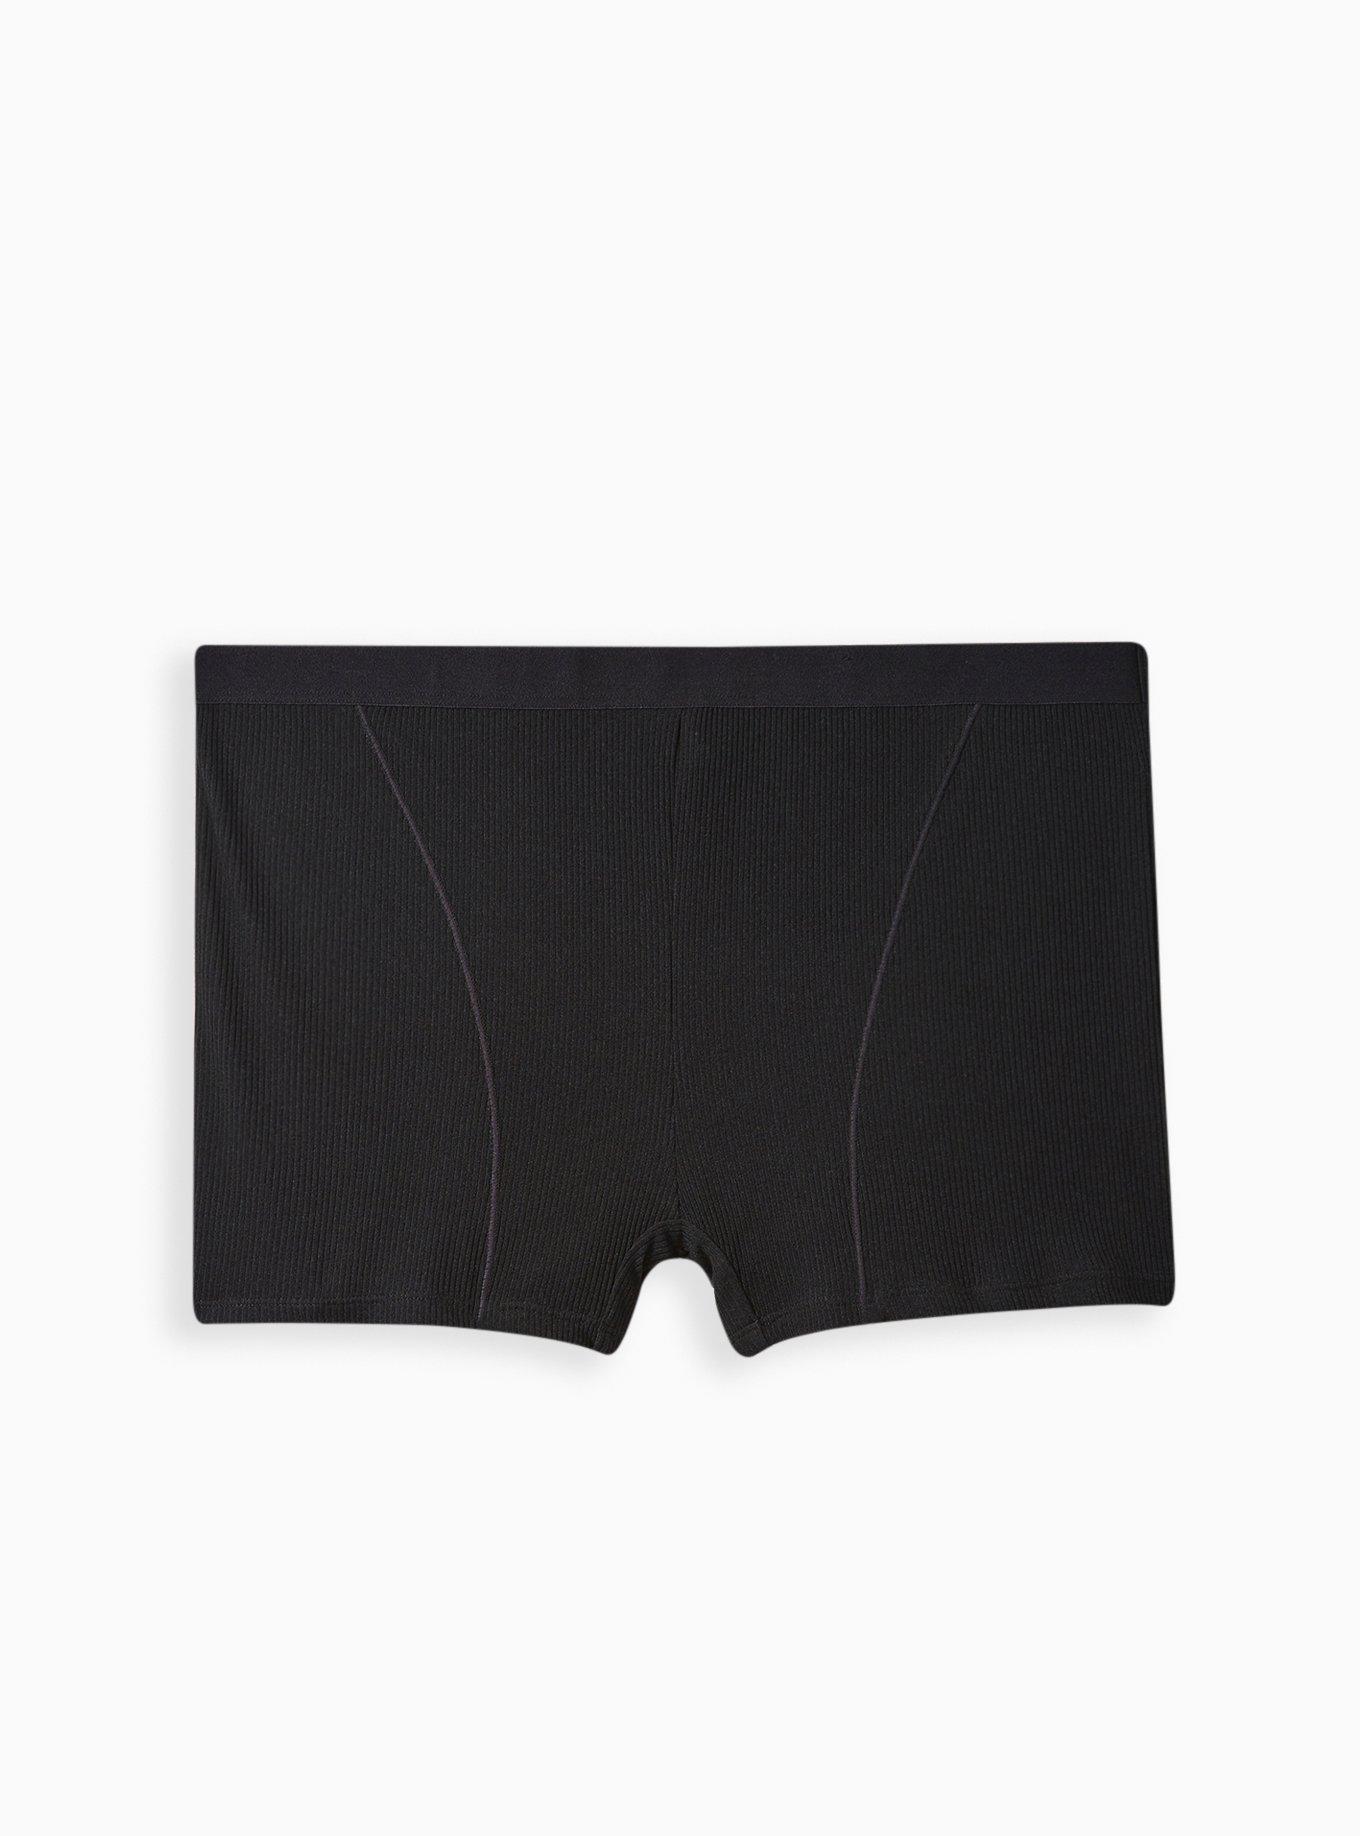 Marilyn Monroe Men Underwear Boxer Shorts Panties Sexy Soft